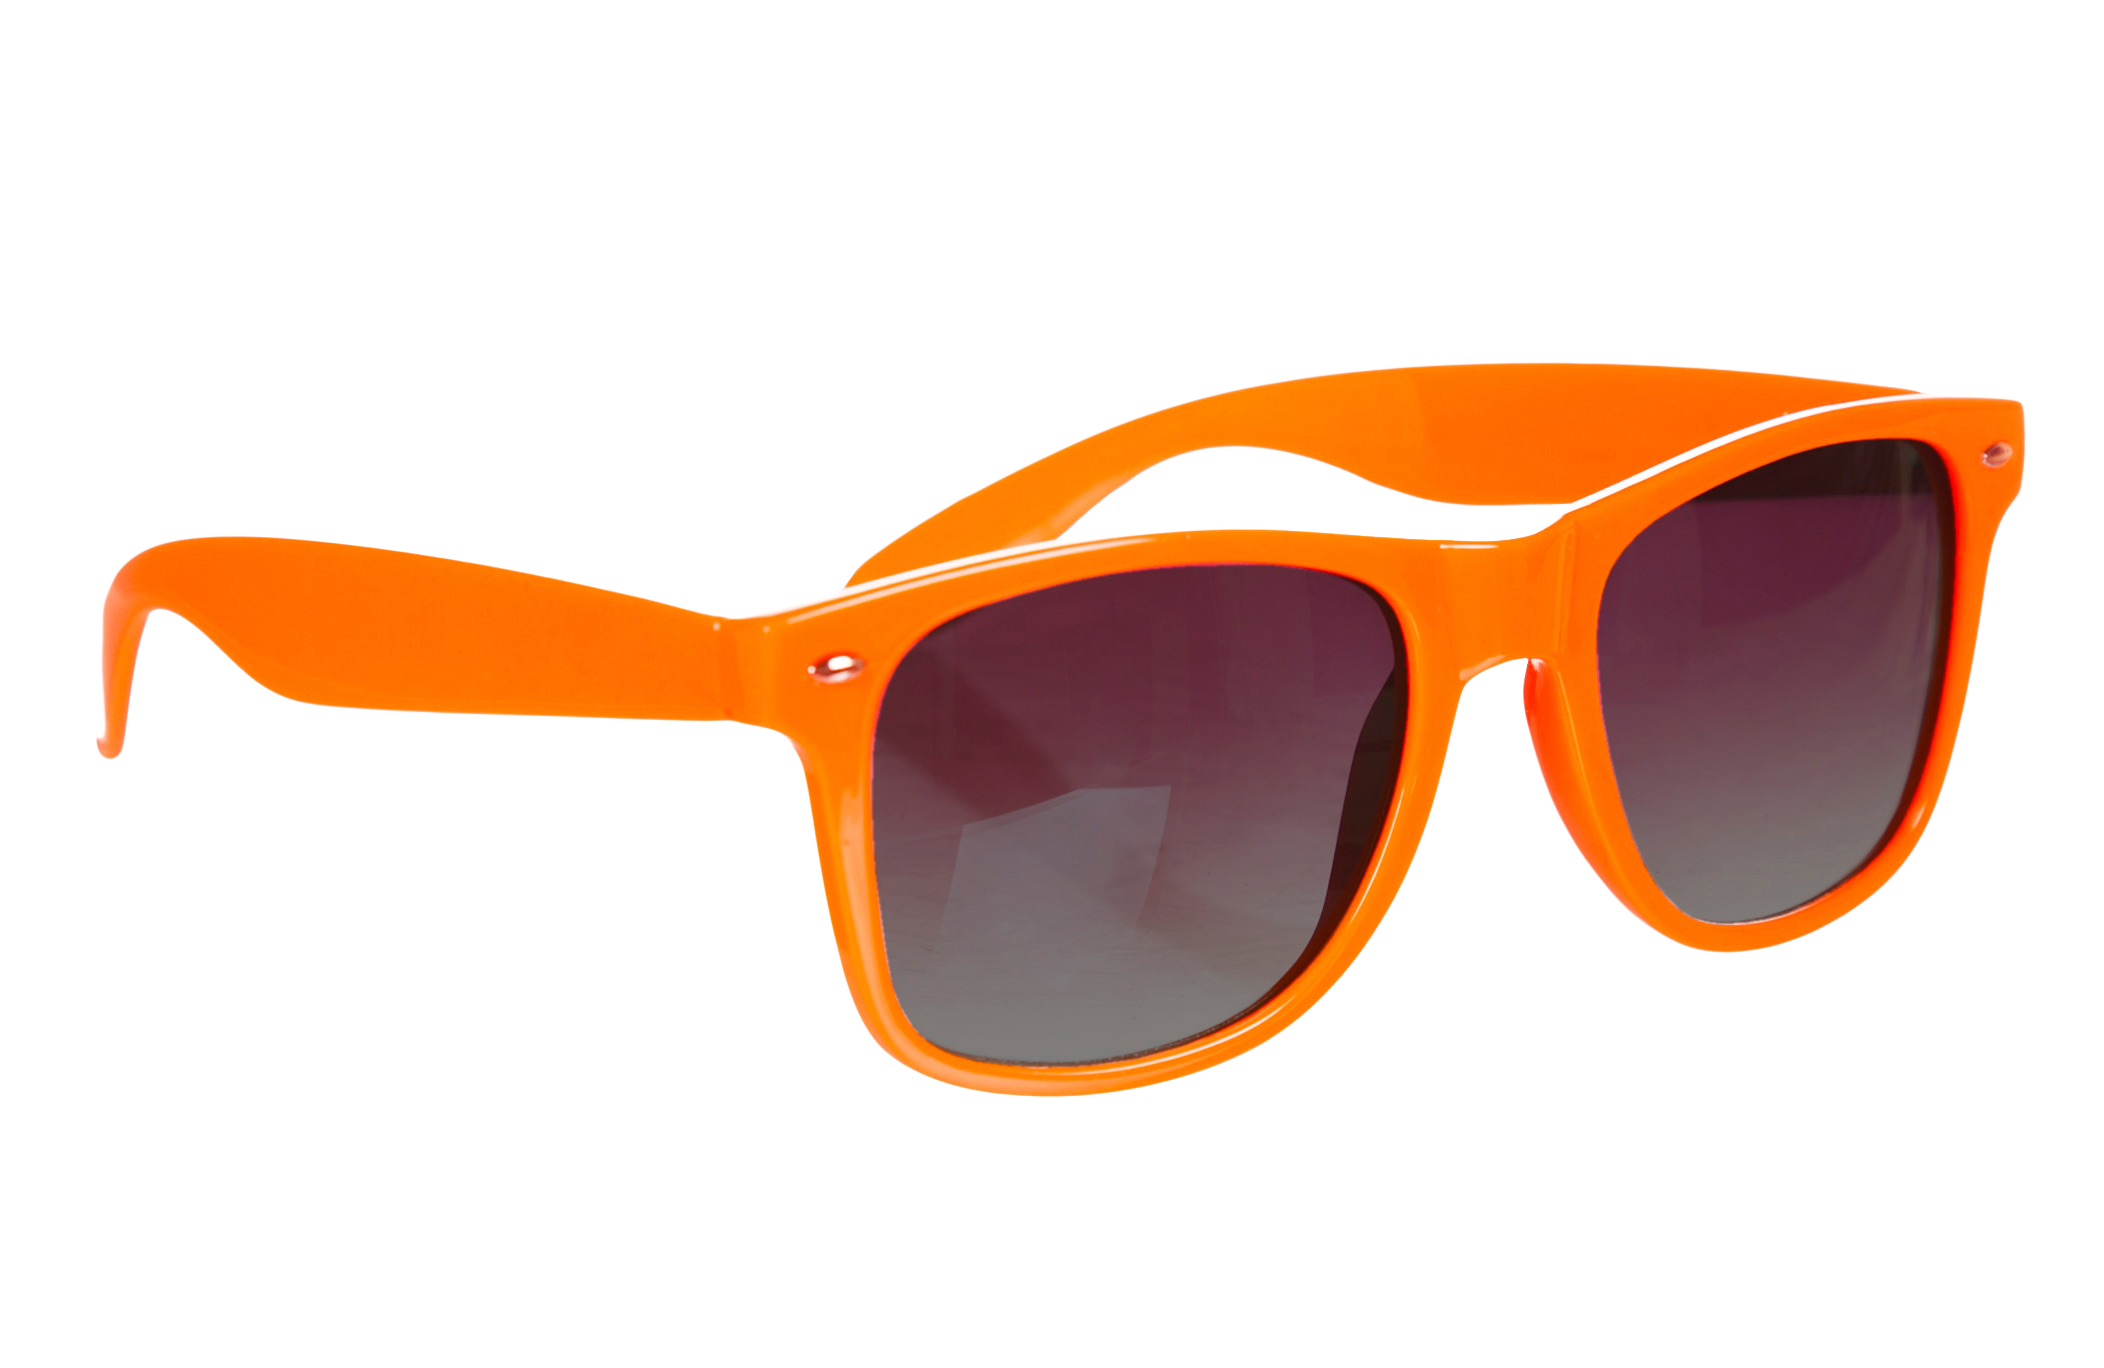 Sunglasses Sunglass Free Transparent Image HQ Clipart